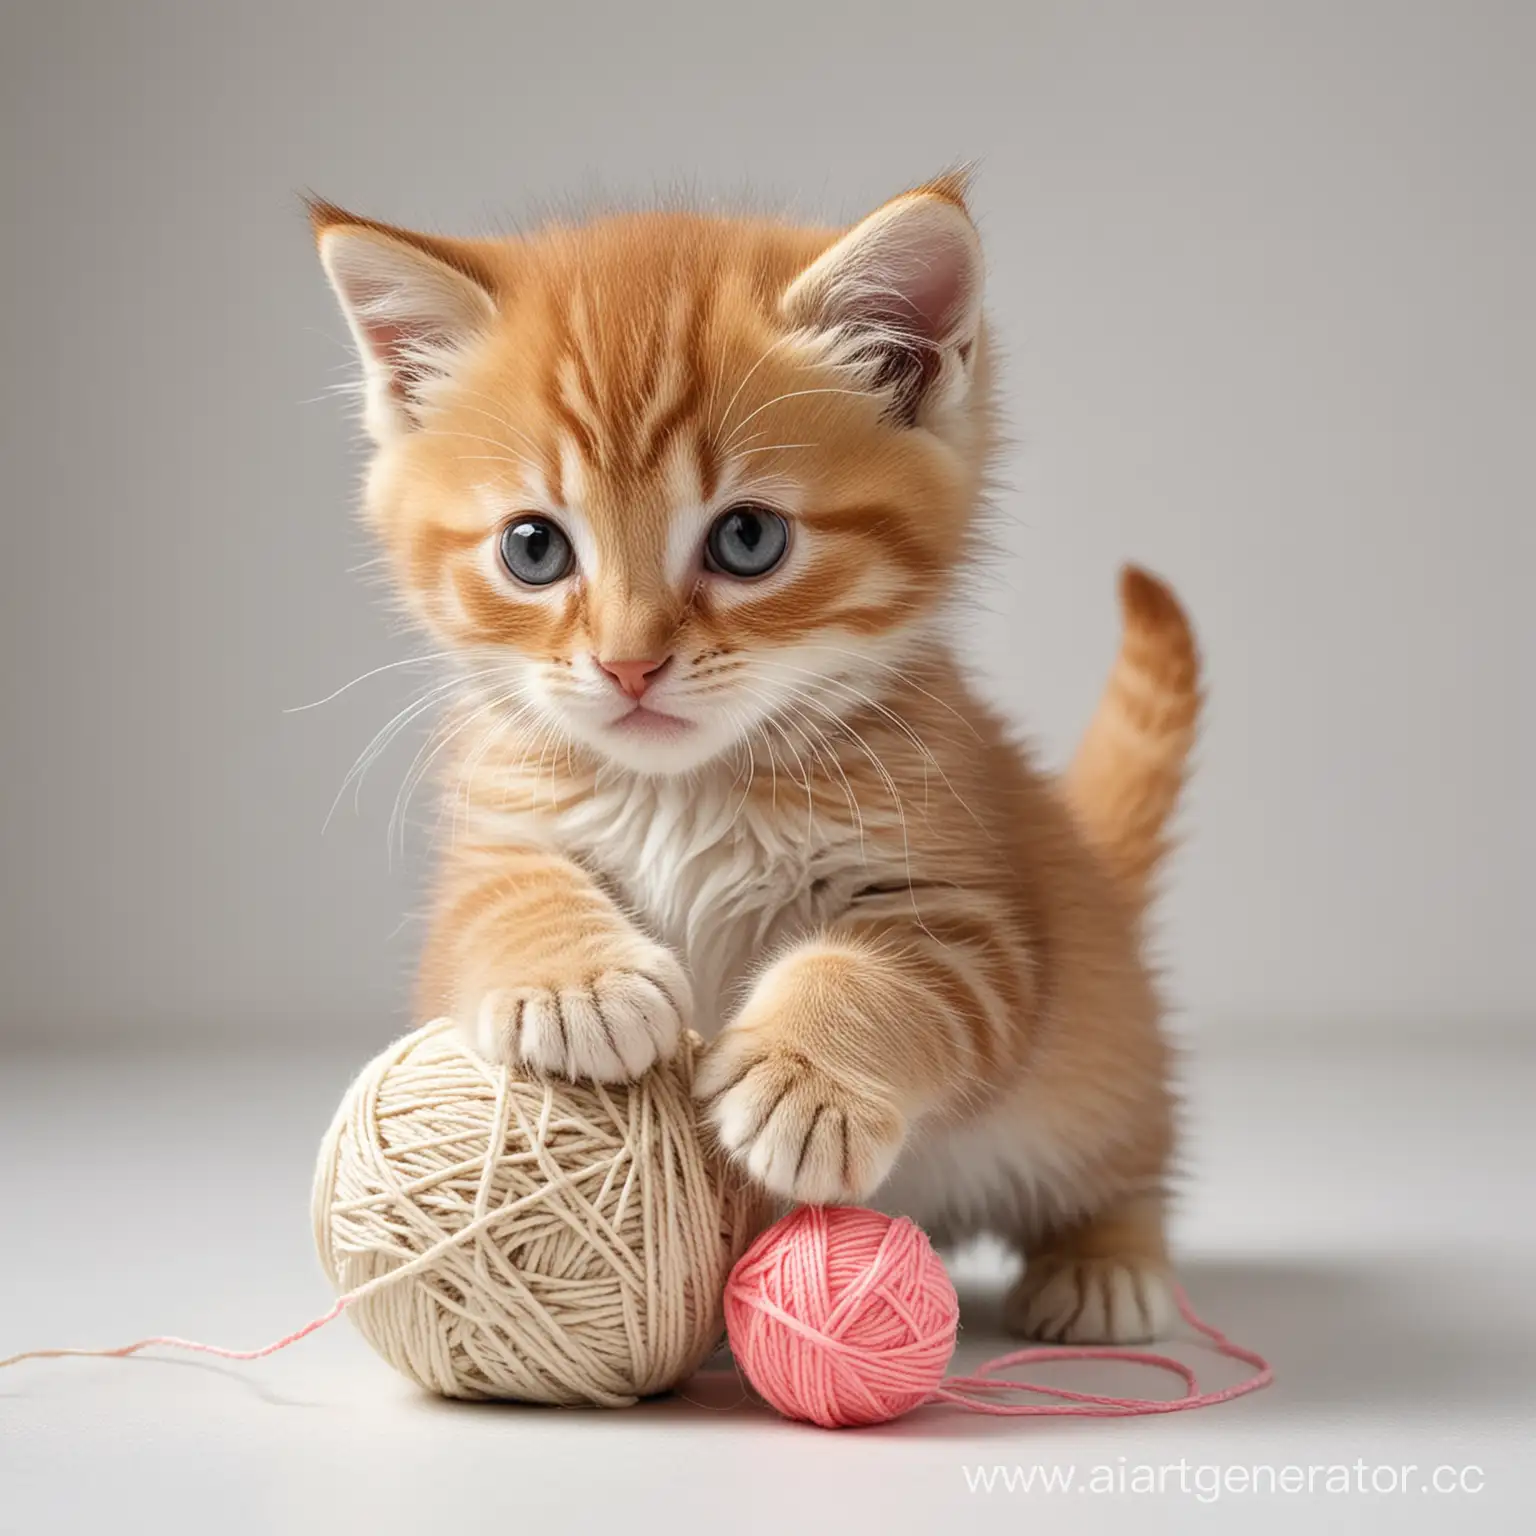 Kitten-Frolicking-with-Yarn-Ball-on-Elegant-White-Backdrop